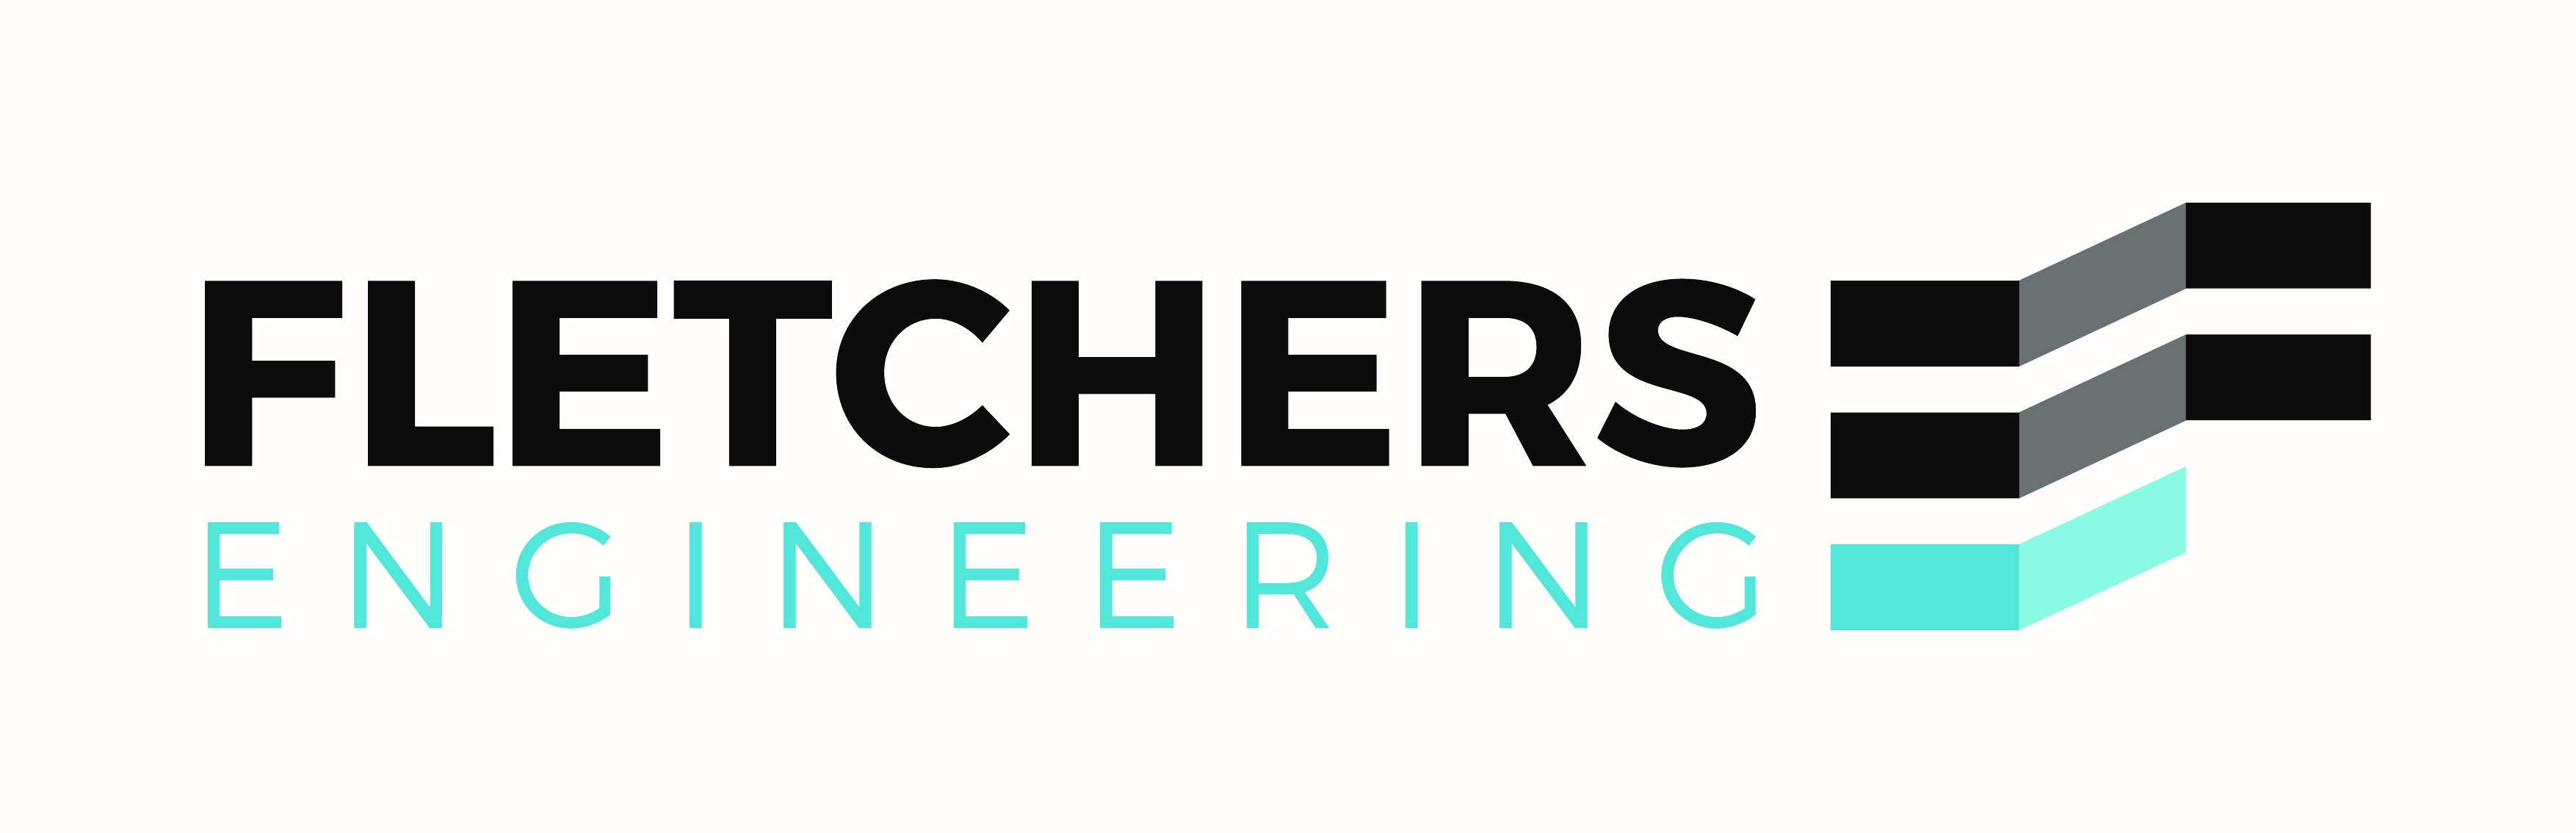 logo for FLETCHERS ENGINEERING